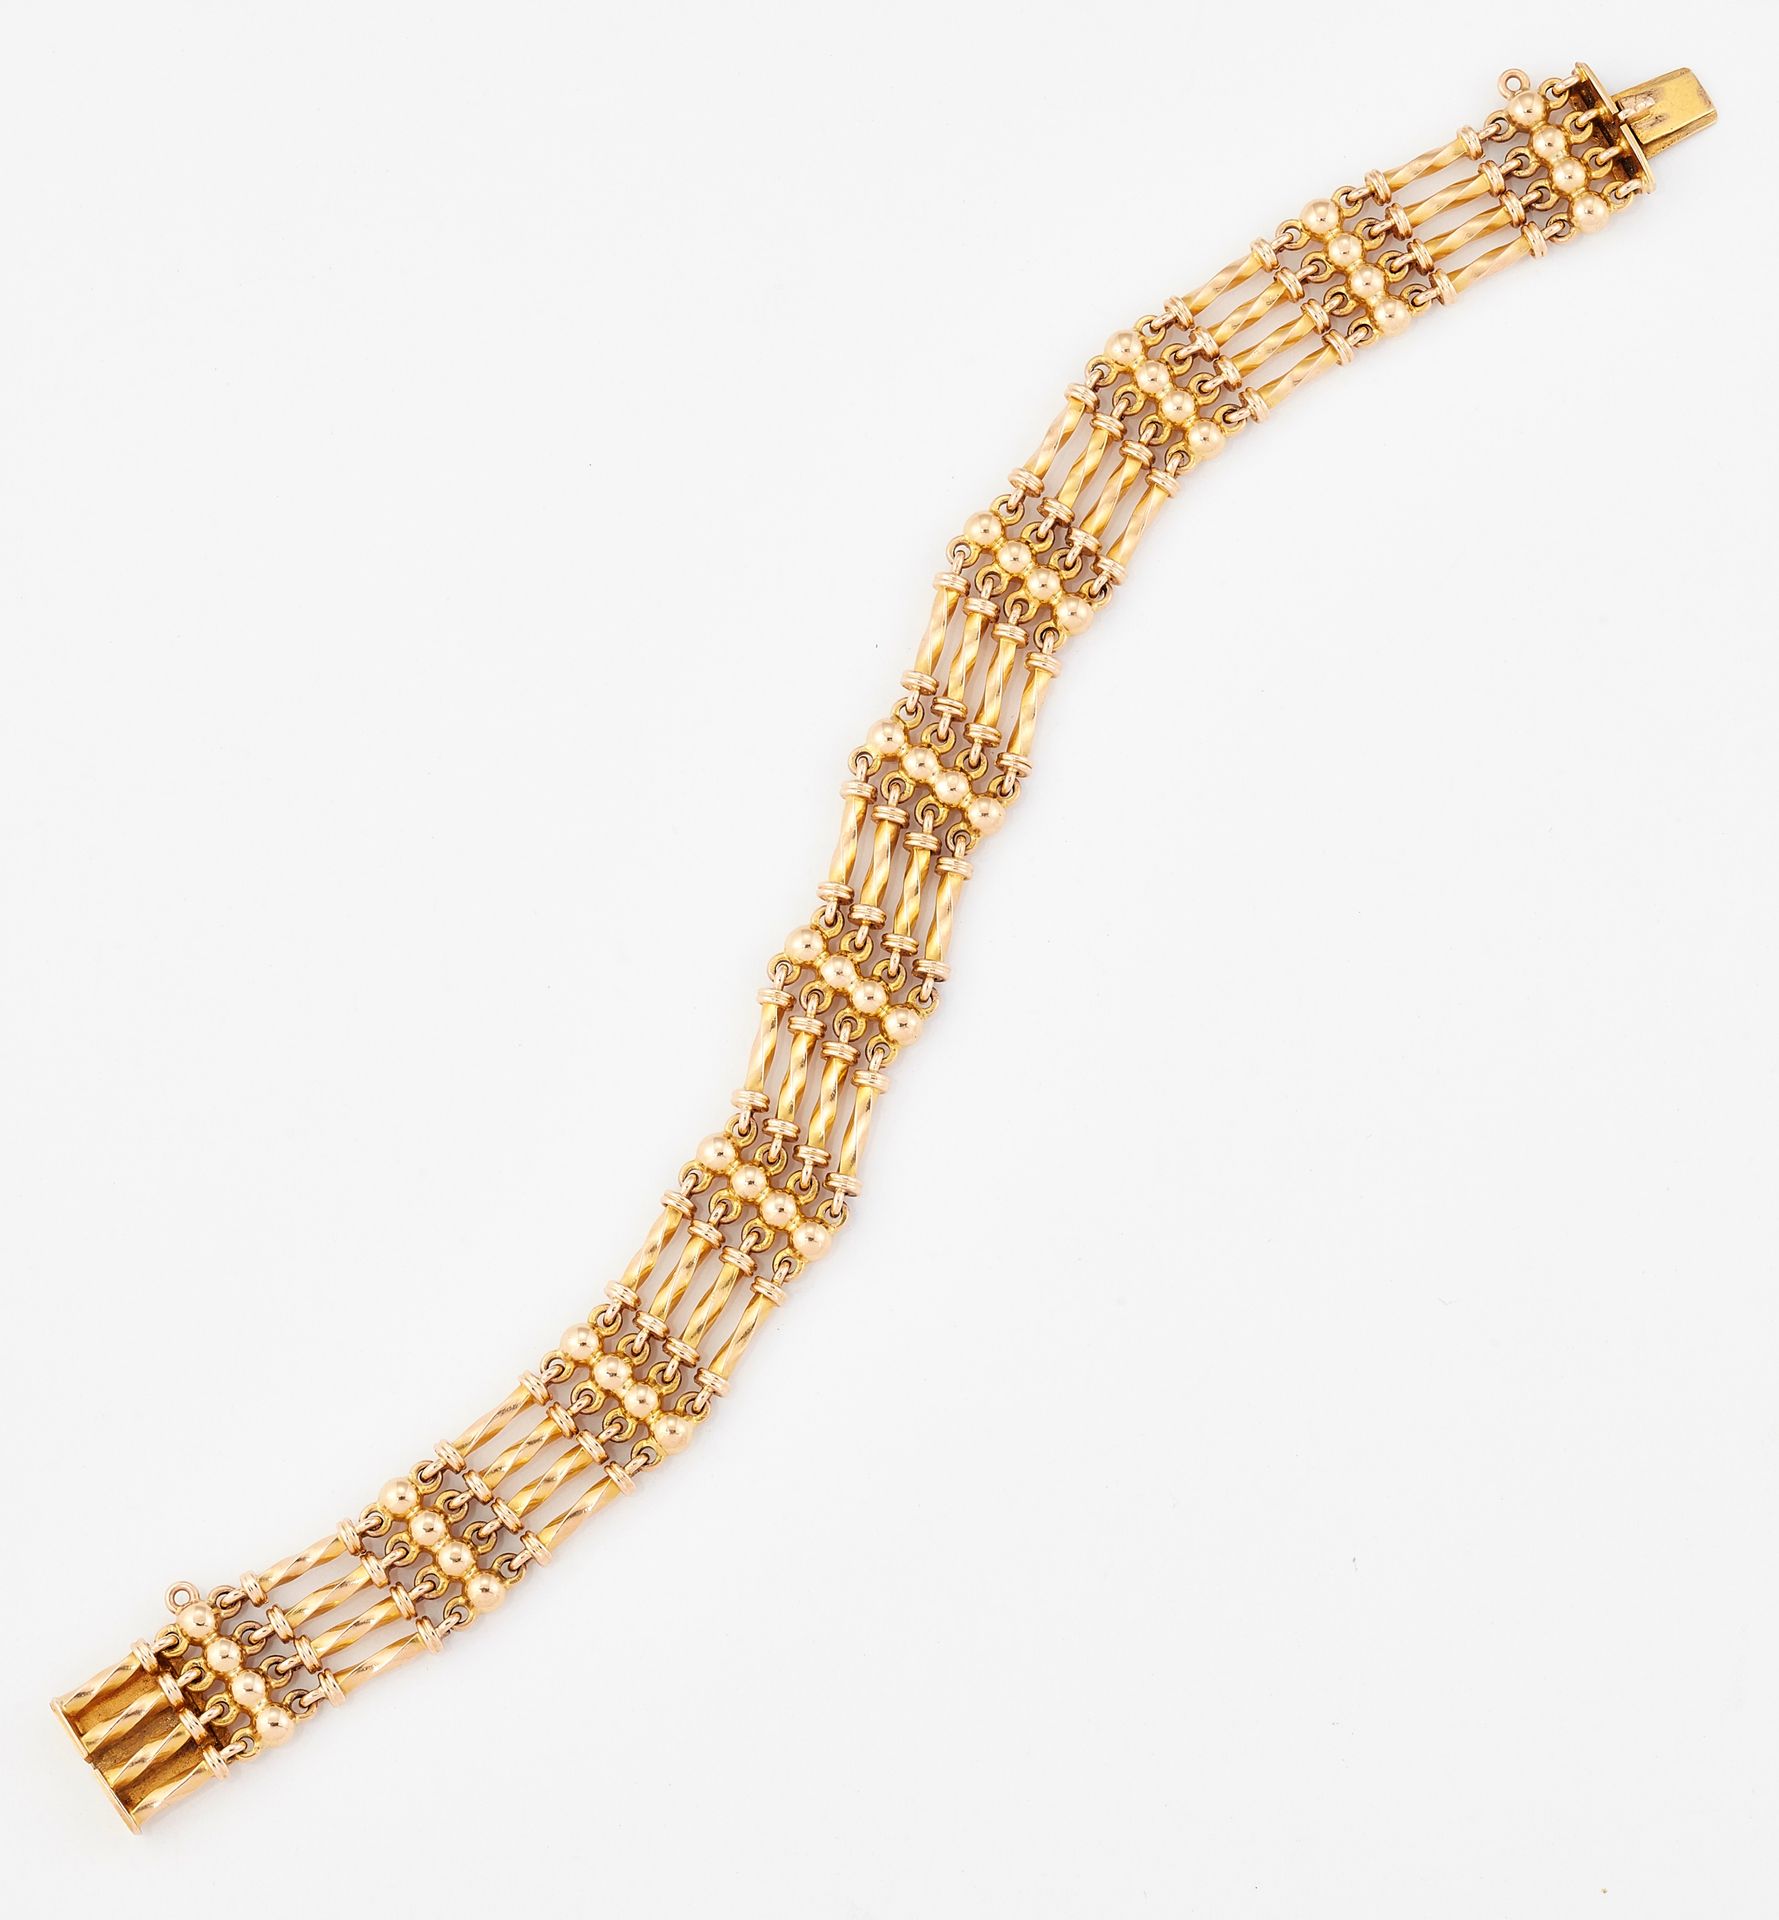 Null 一件维多利亚时期的手镯，由四个扭曲的条状链接和珠状链接组成，标有 "15"。长19.5厘米，宽1.2厘米，重24.0克500800300整体状况良好